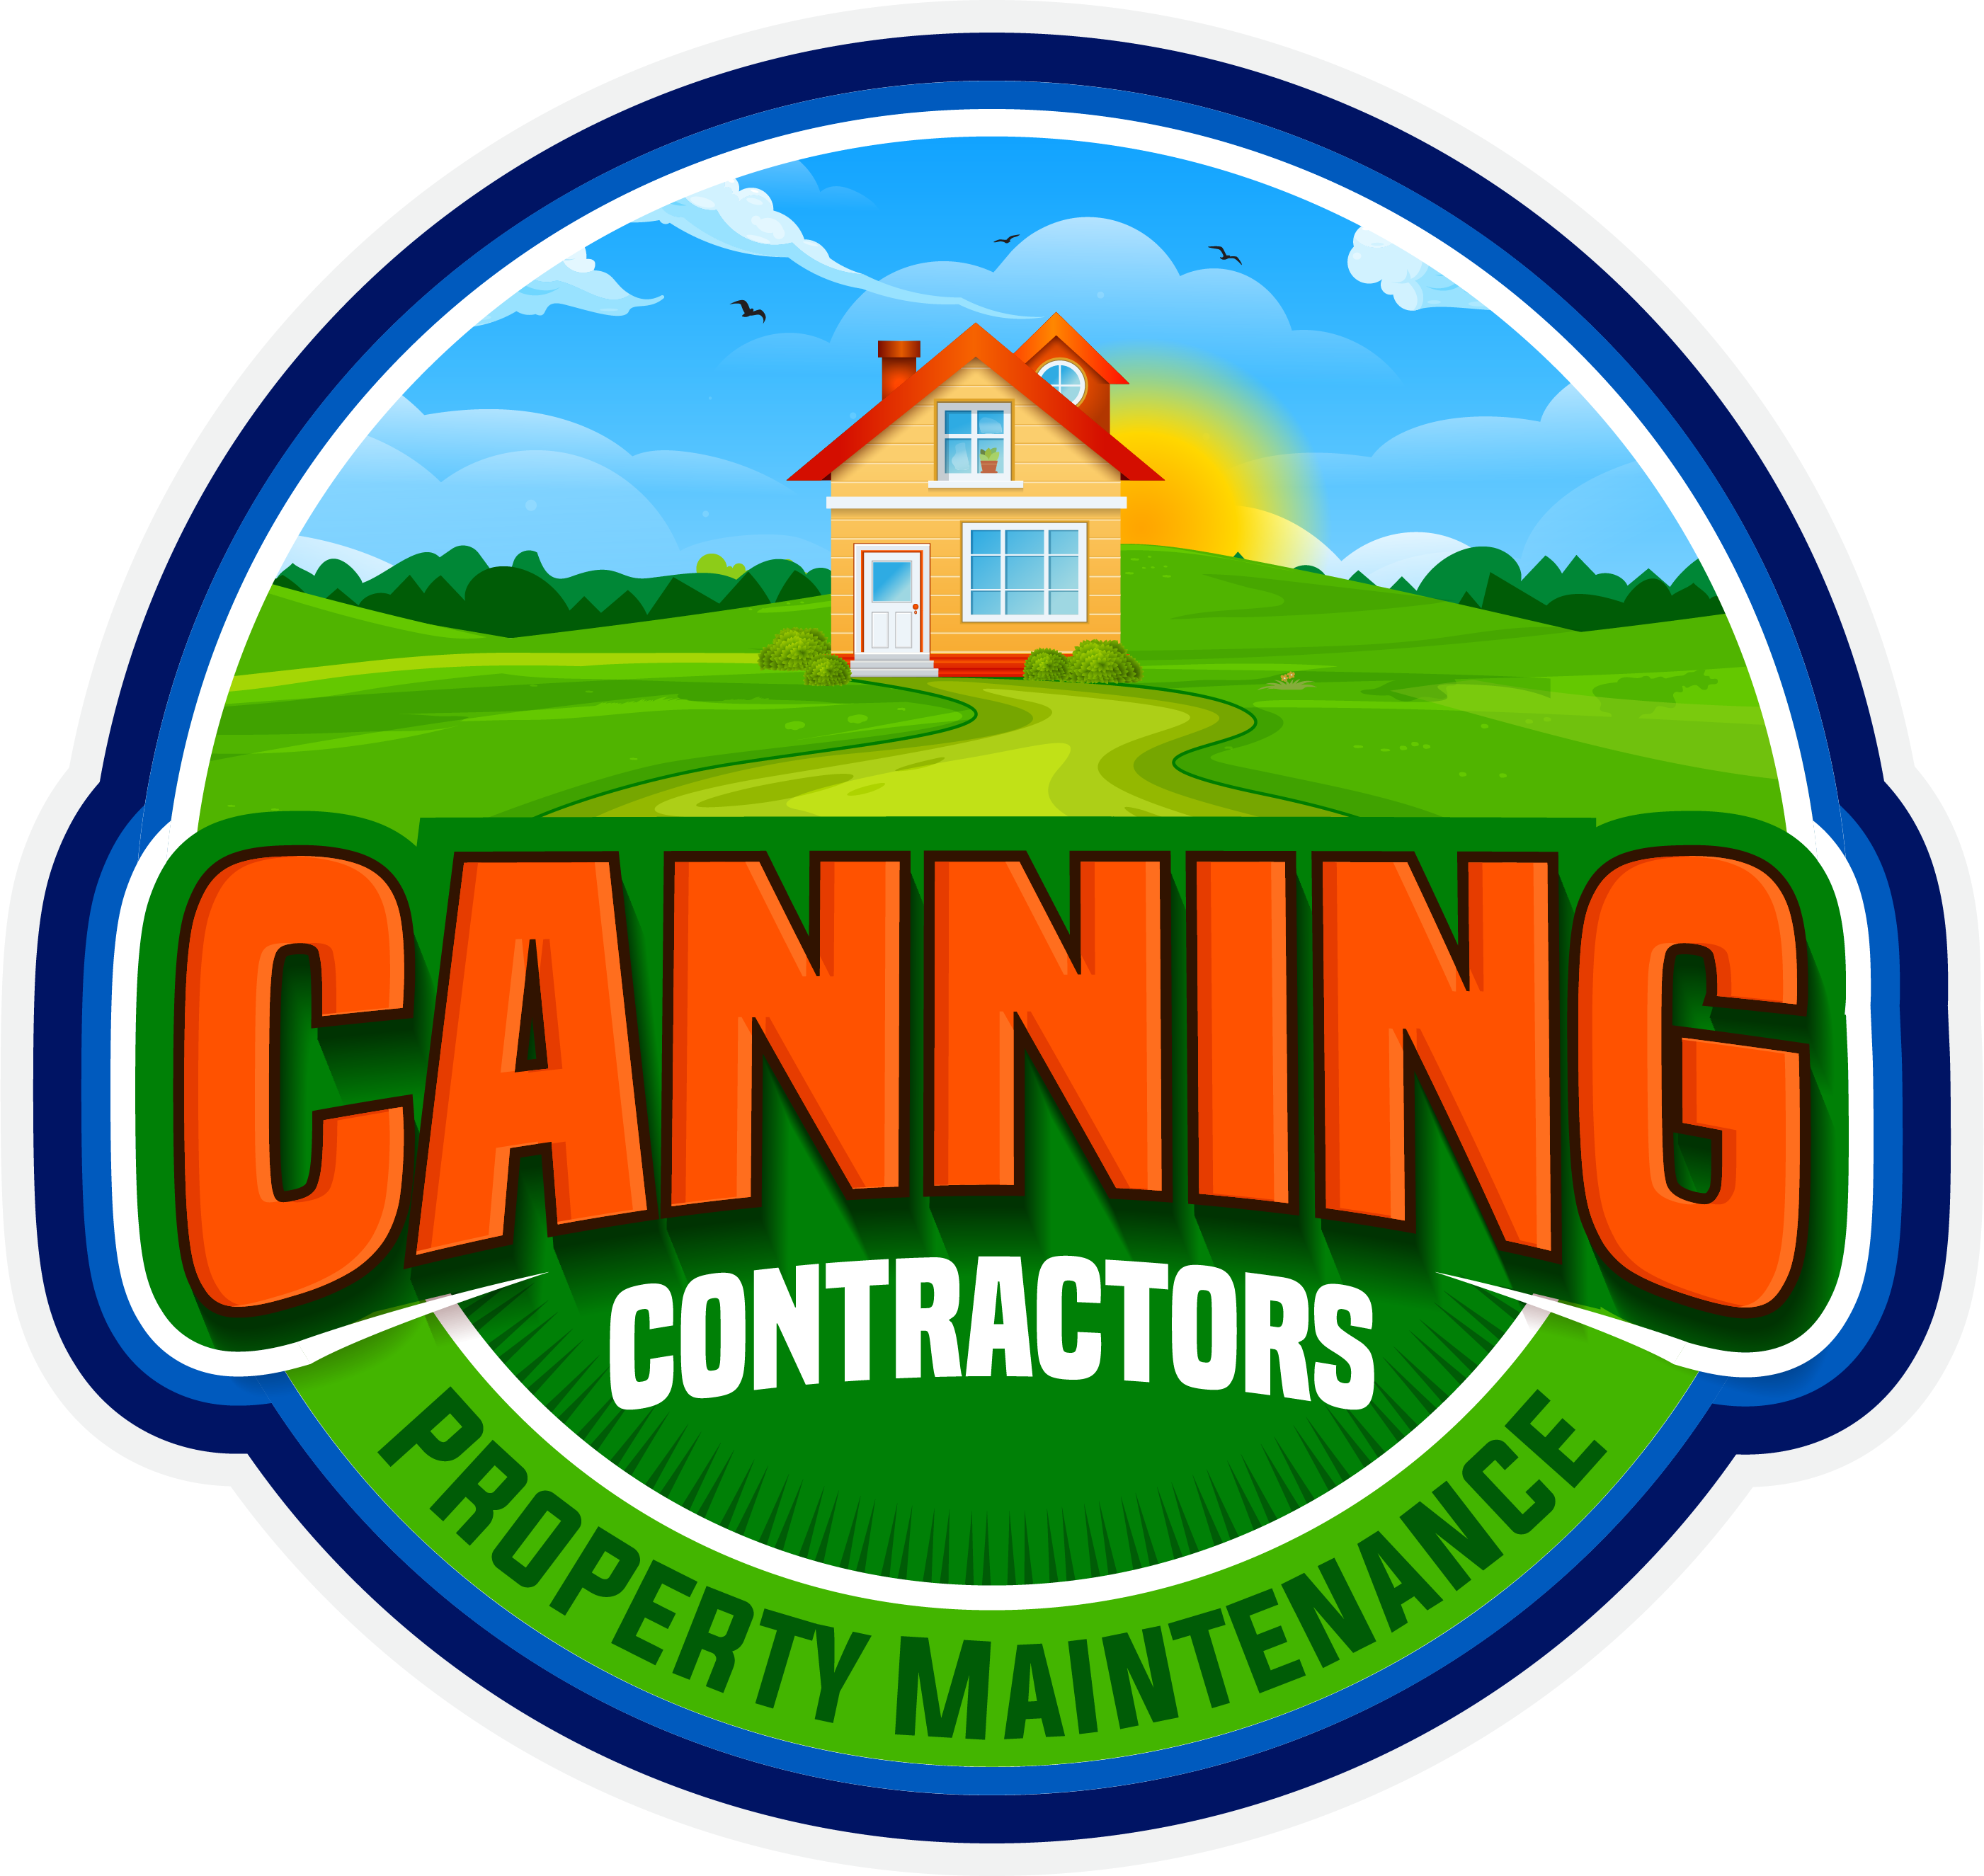 Canning Contractors